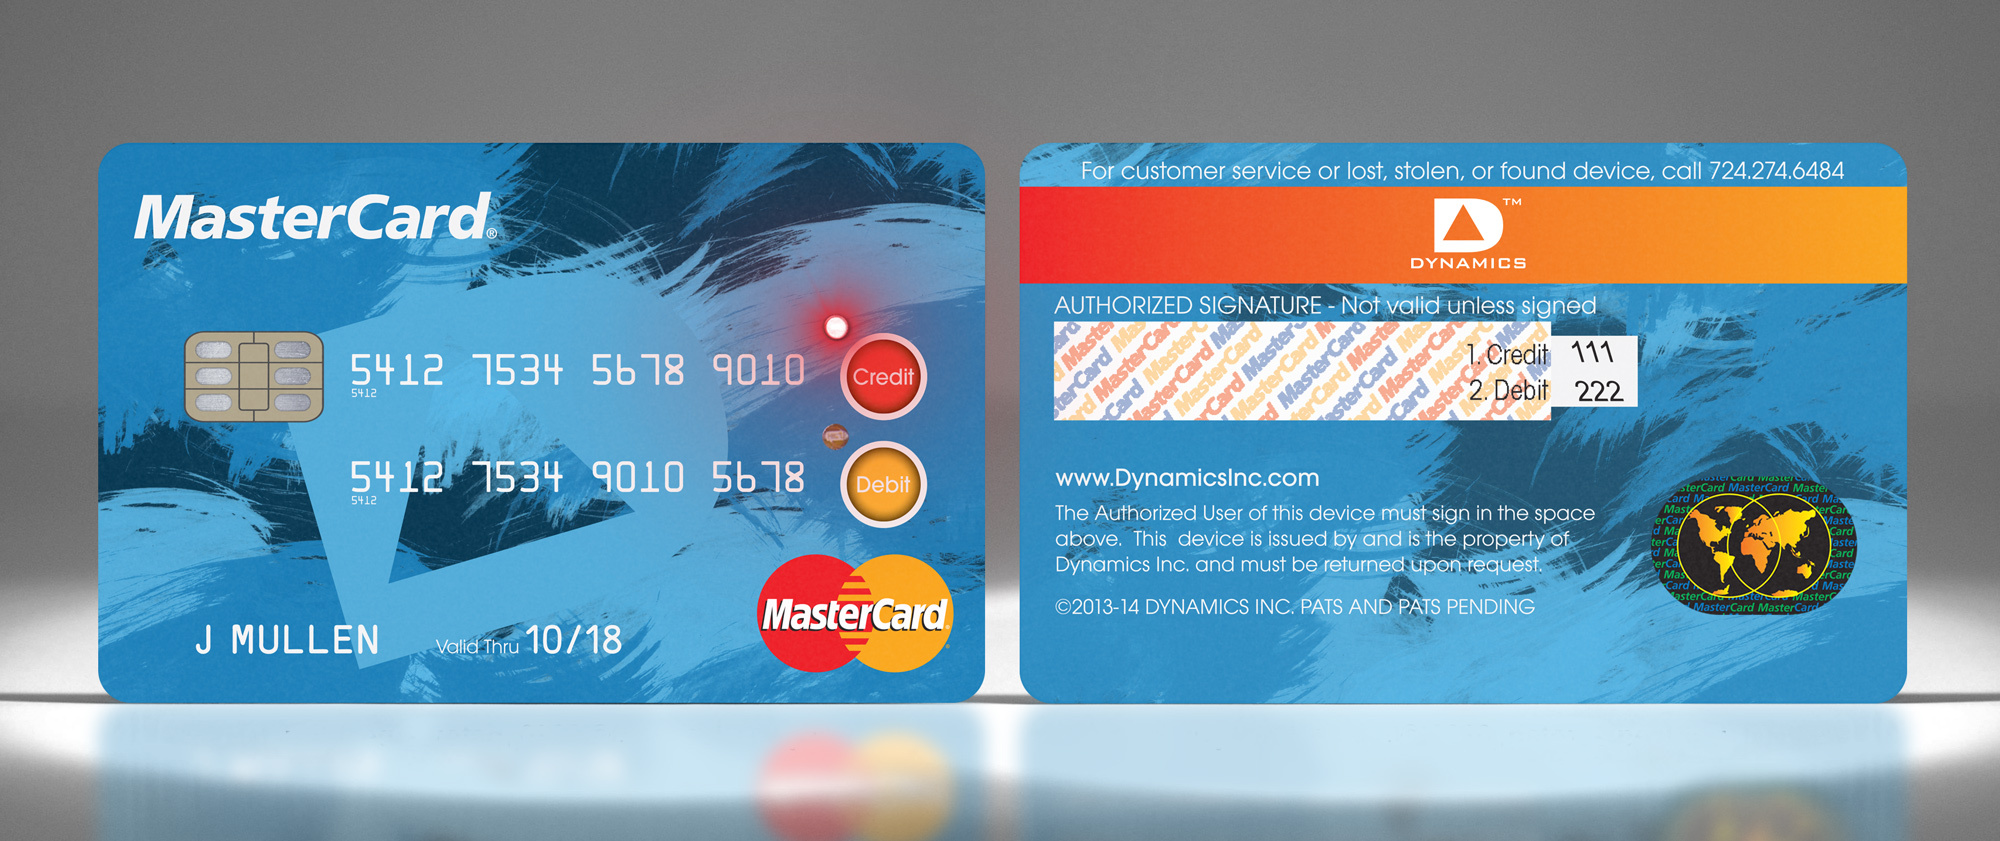 MasterCard_07